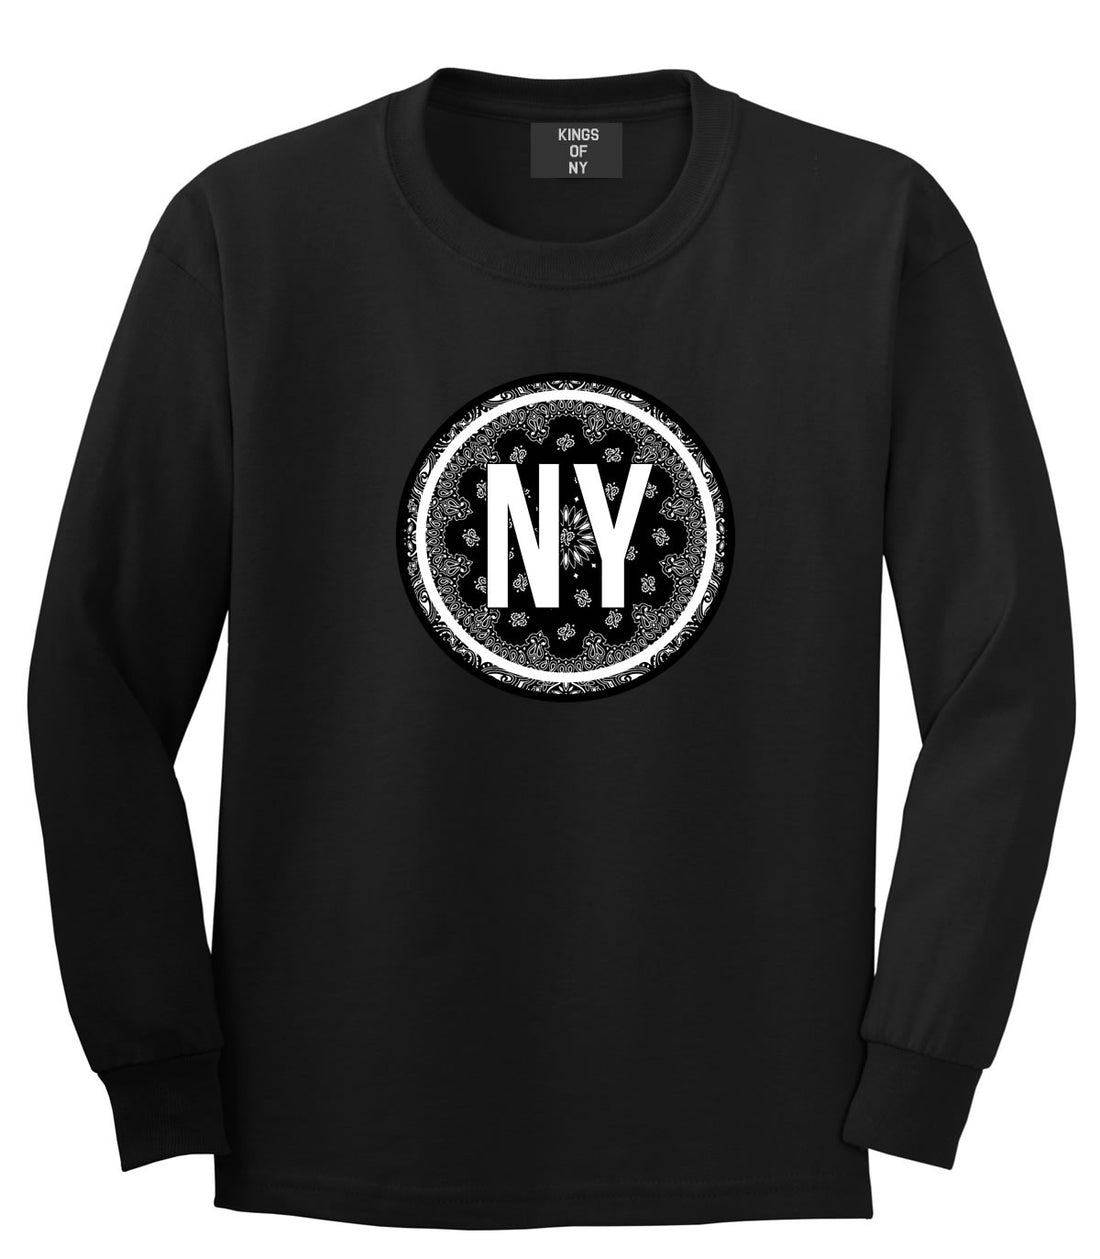 Kings Of NY New York Bandana Print NYC Long Sleeve T-Shirt in Black